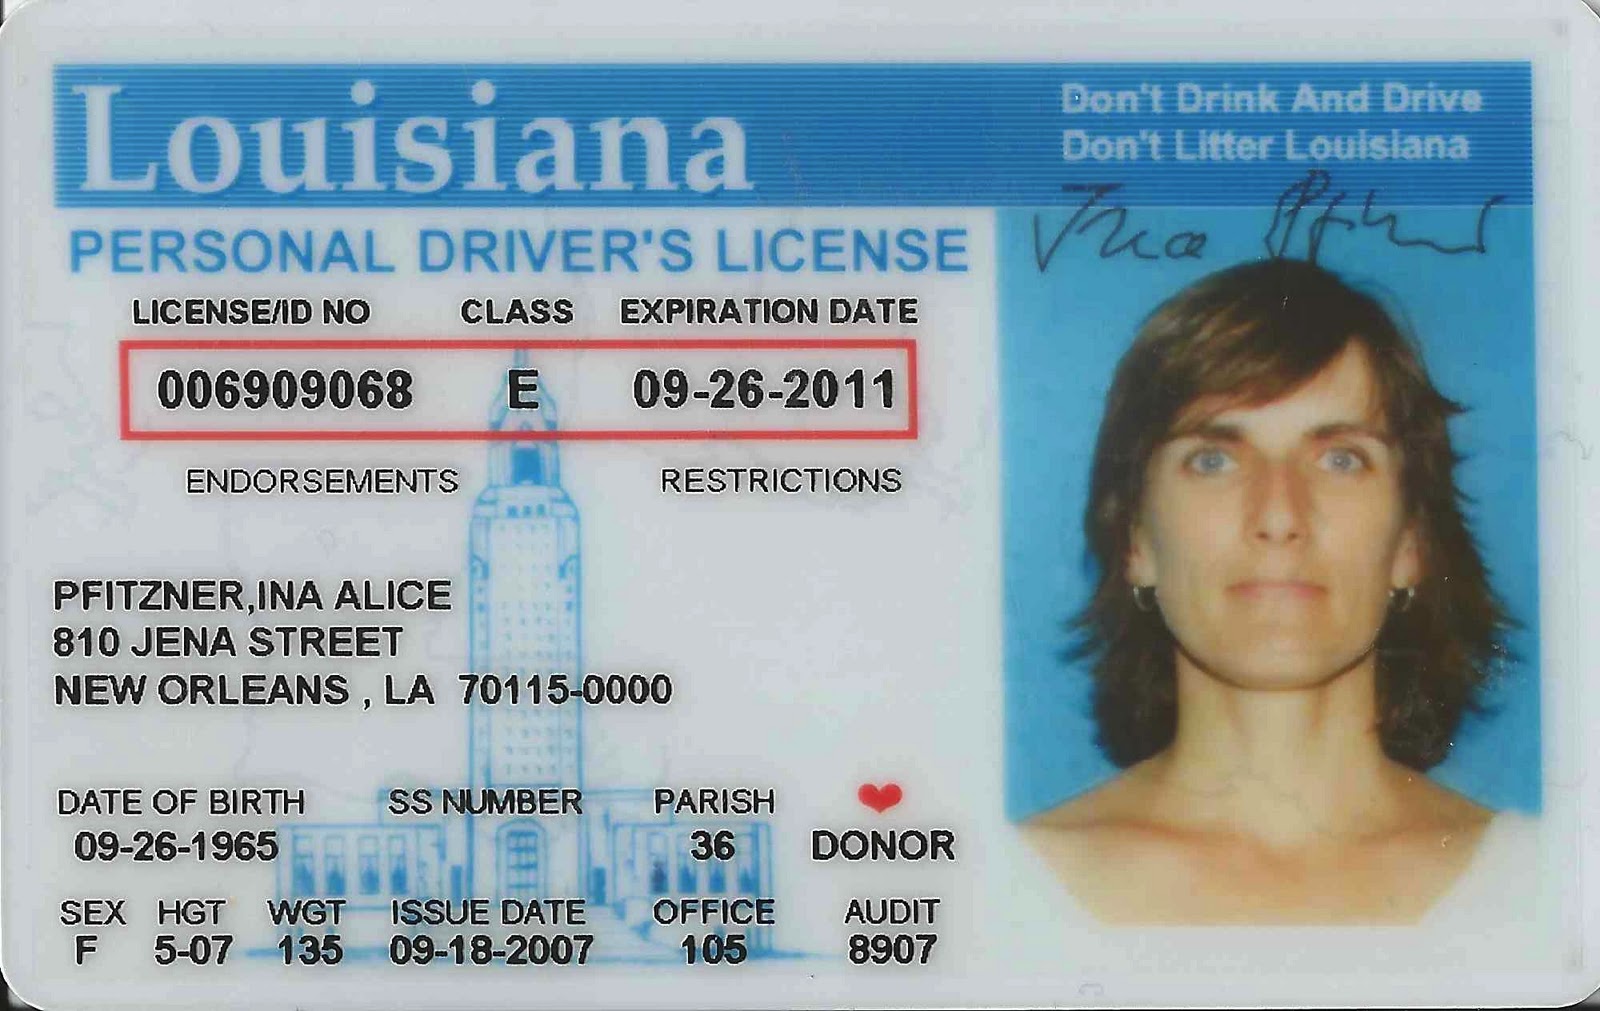 New Louisiana Drivers License Nar Media Kit